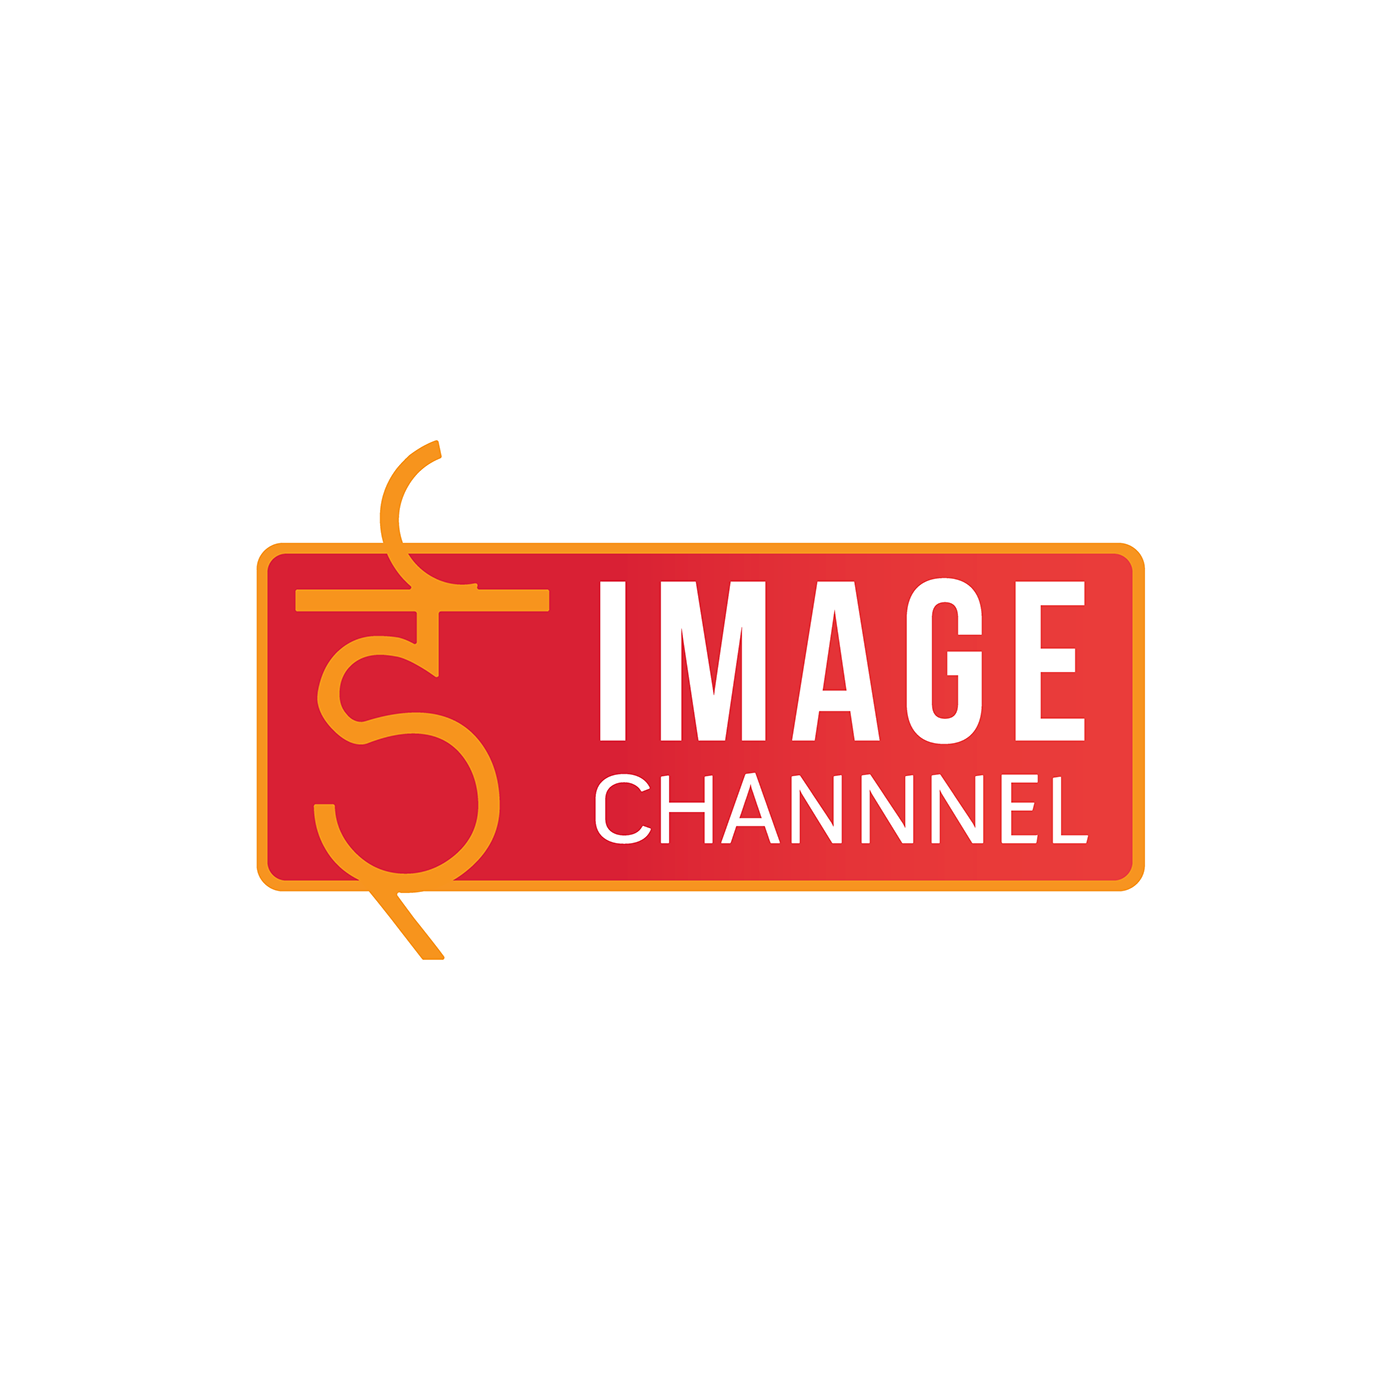 Image Channel nepali design Siddharth Belbase redesign Nepali Channels news channels nepal Image Channel Pvt. Ltd.